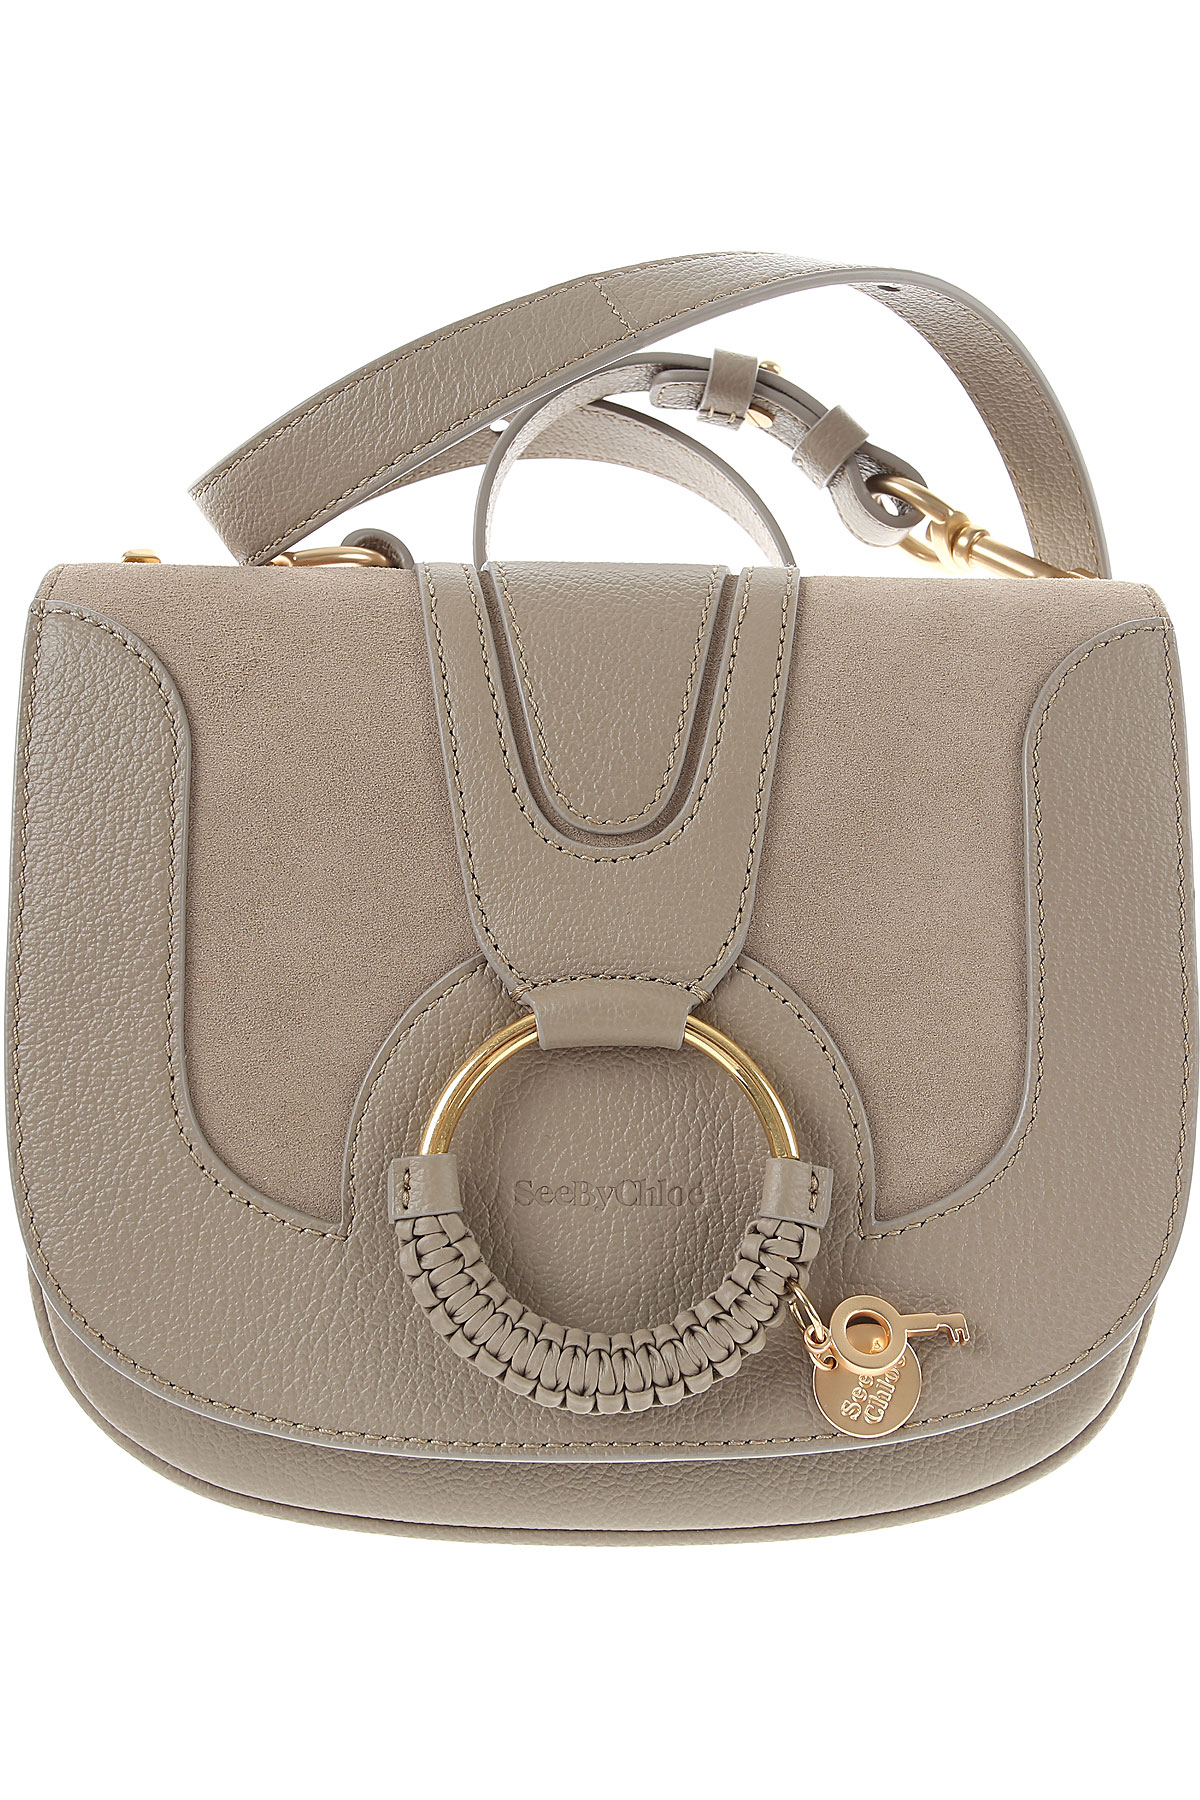 Handbags See By Chloe, Style code: chs18as89641723w-23w-A880